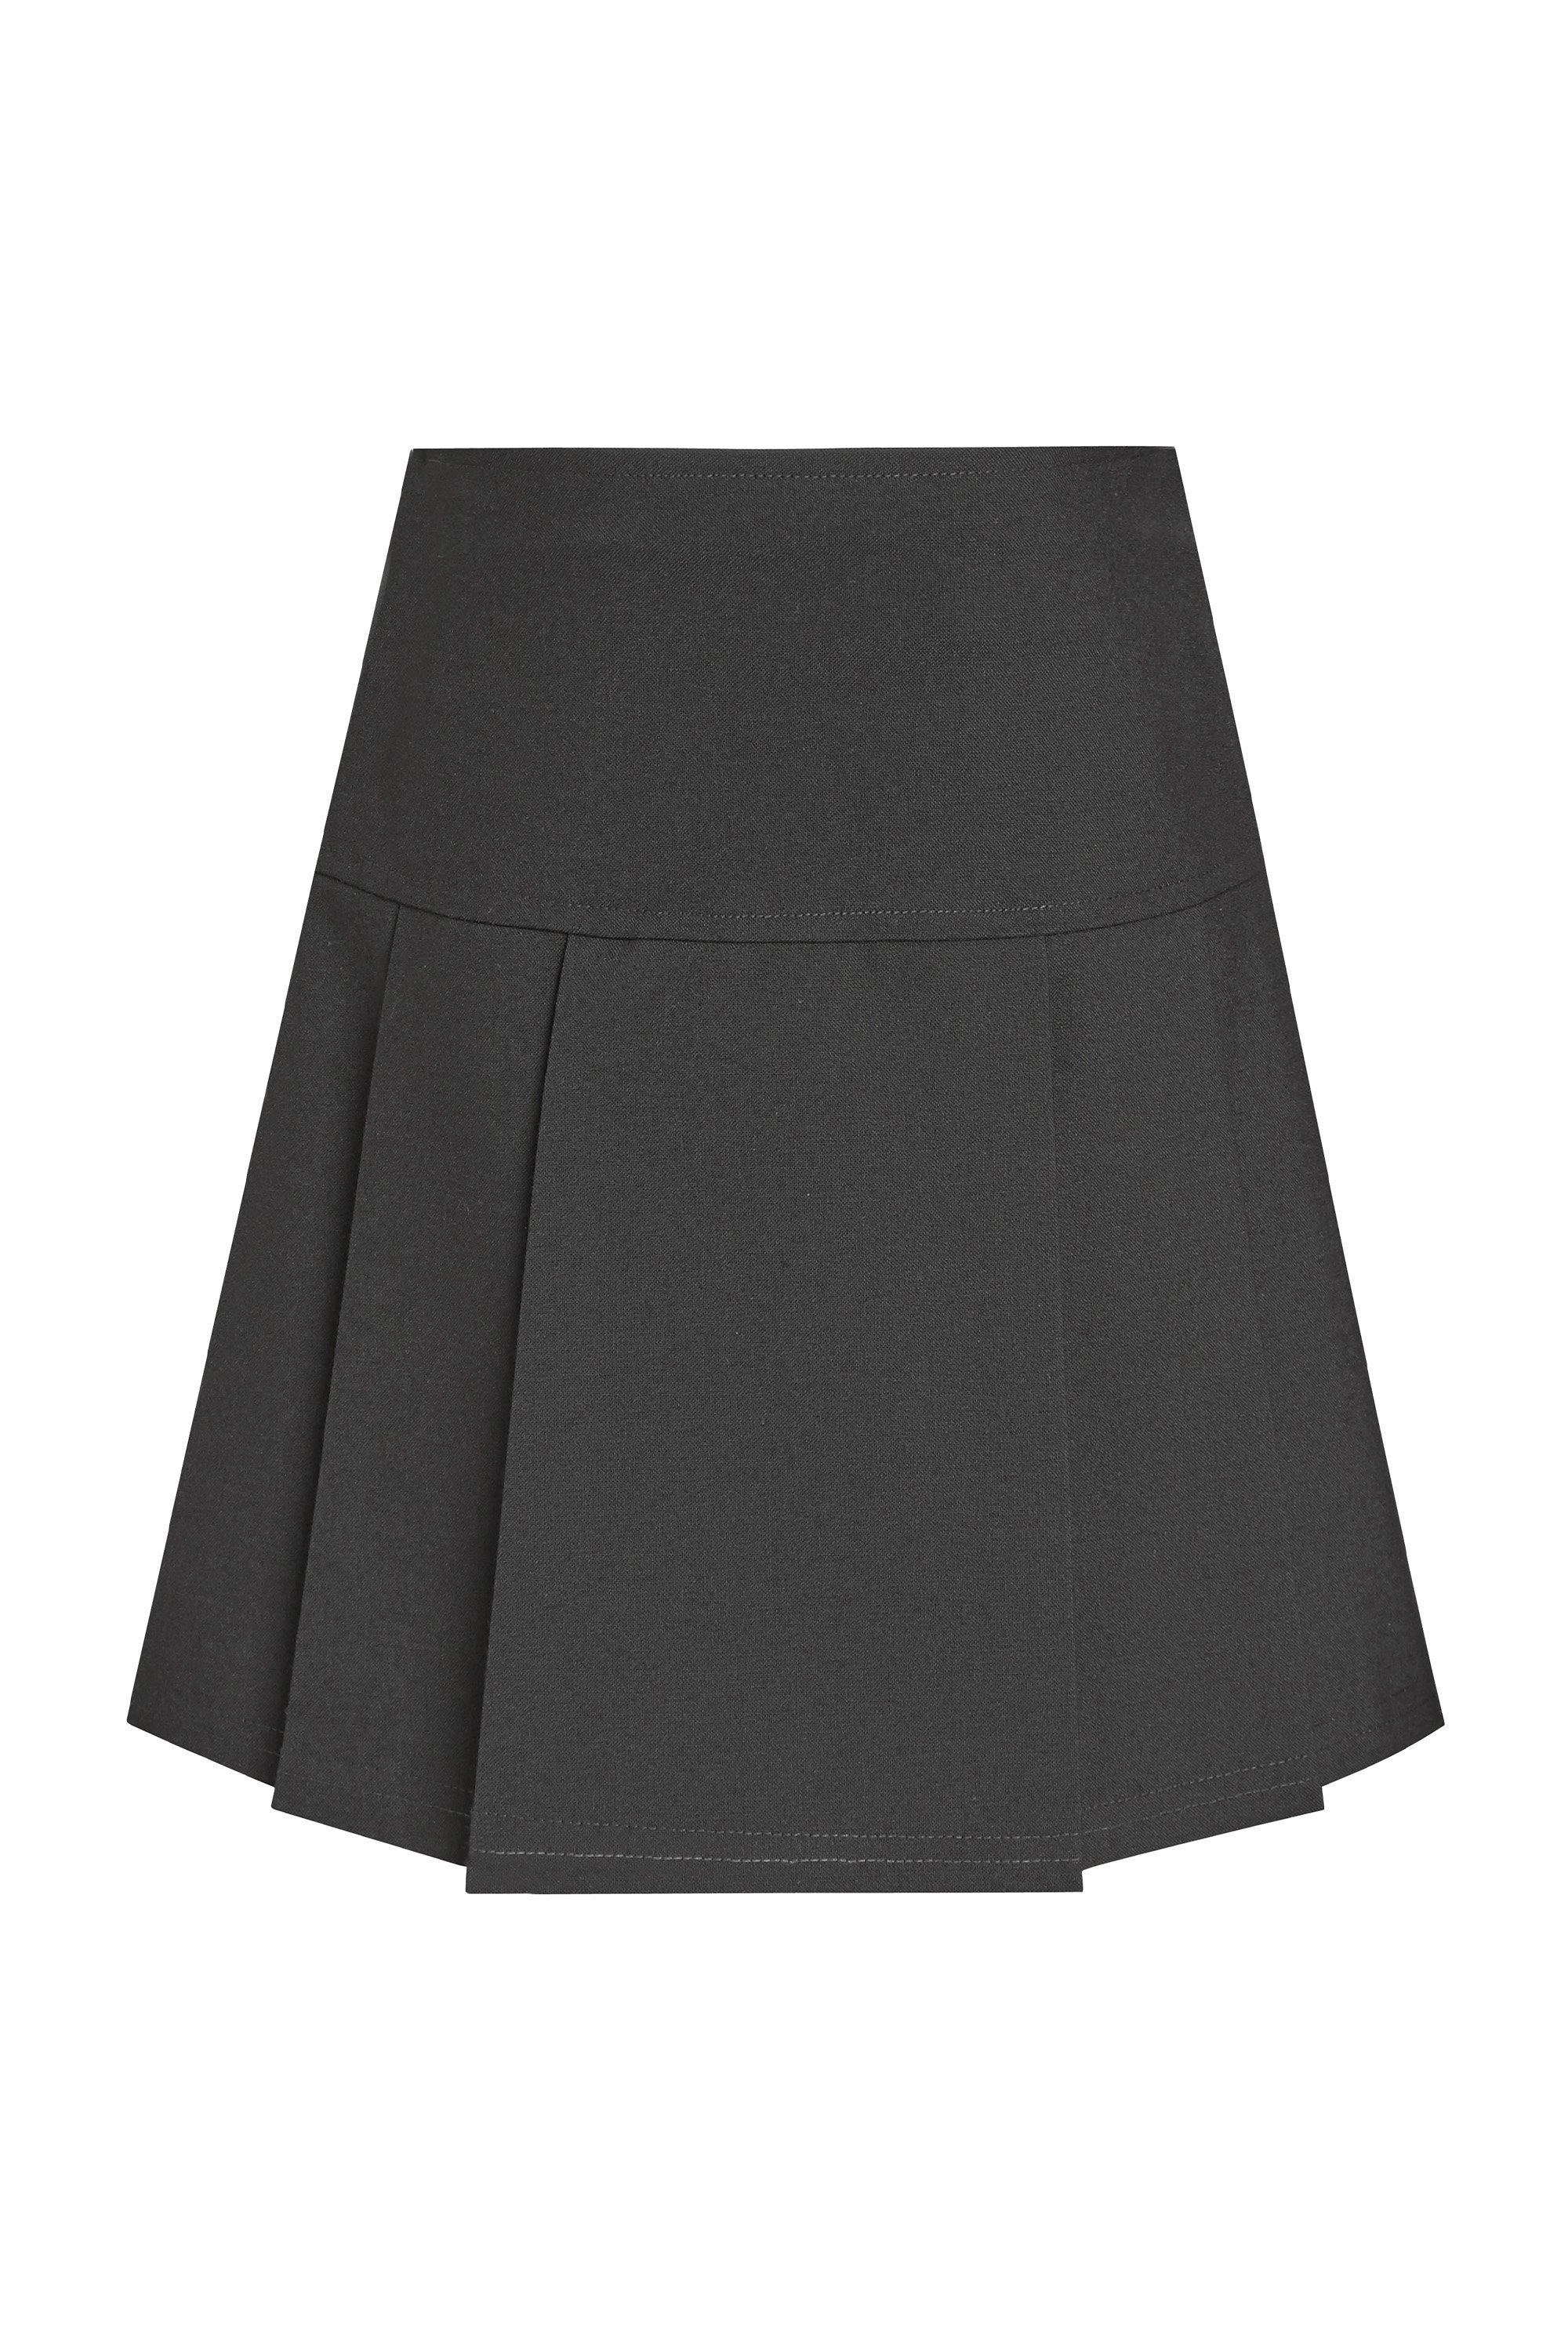 Girls Permanent Pleat School Skirt